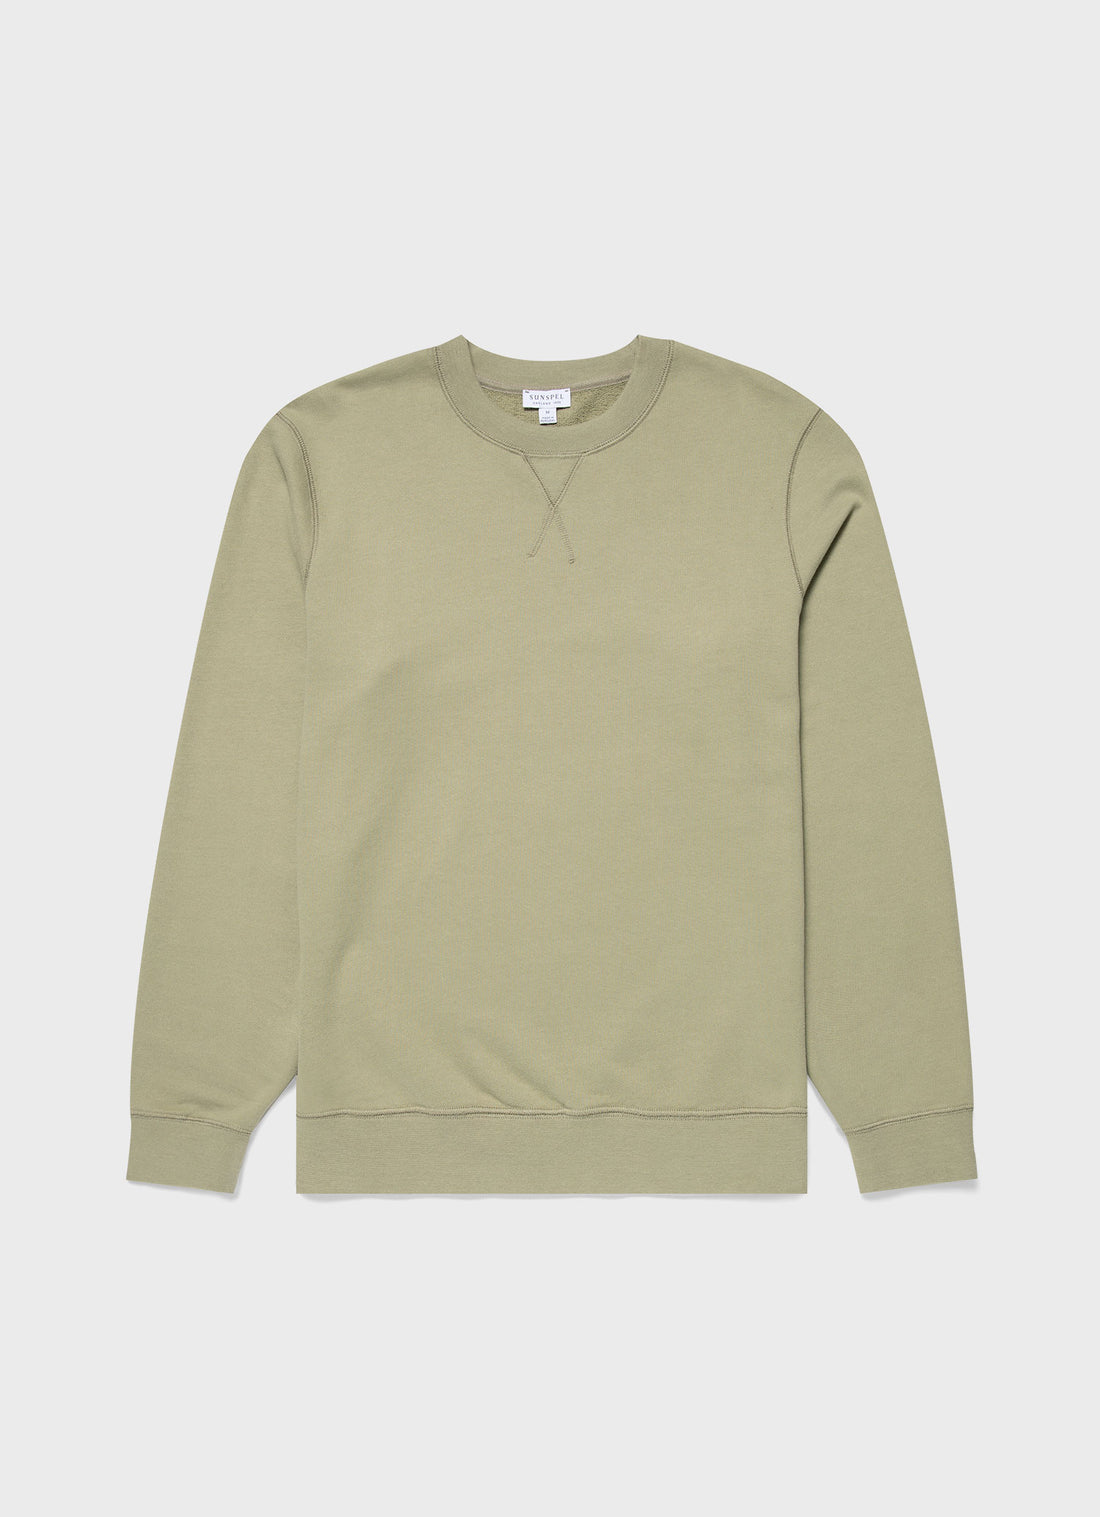 Men's Loopback Sweatshirt in Pale Khaki